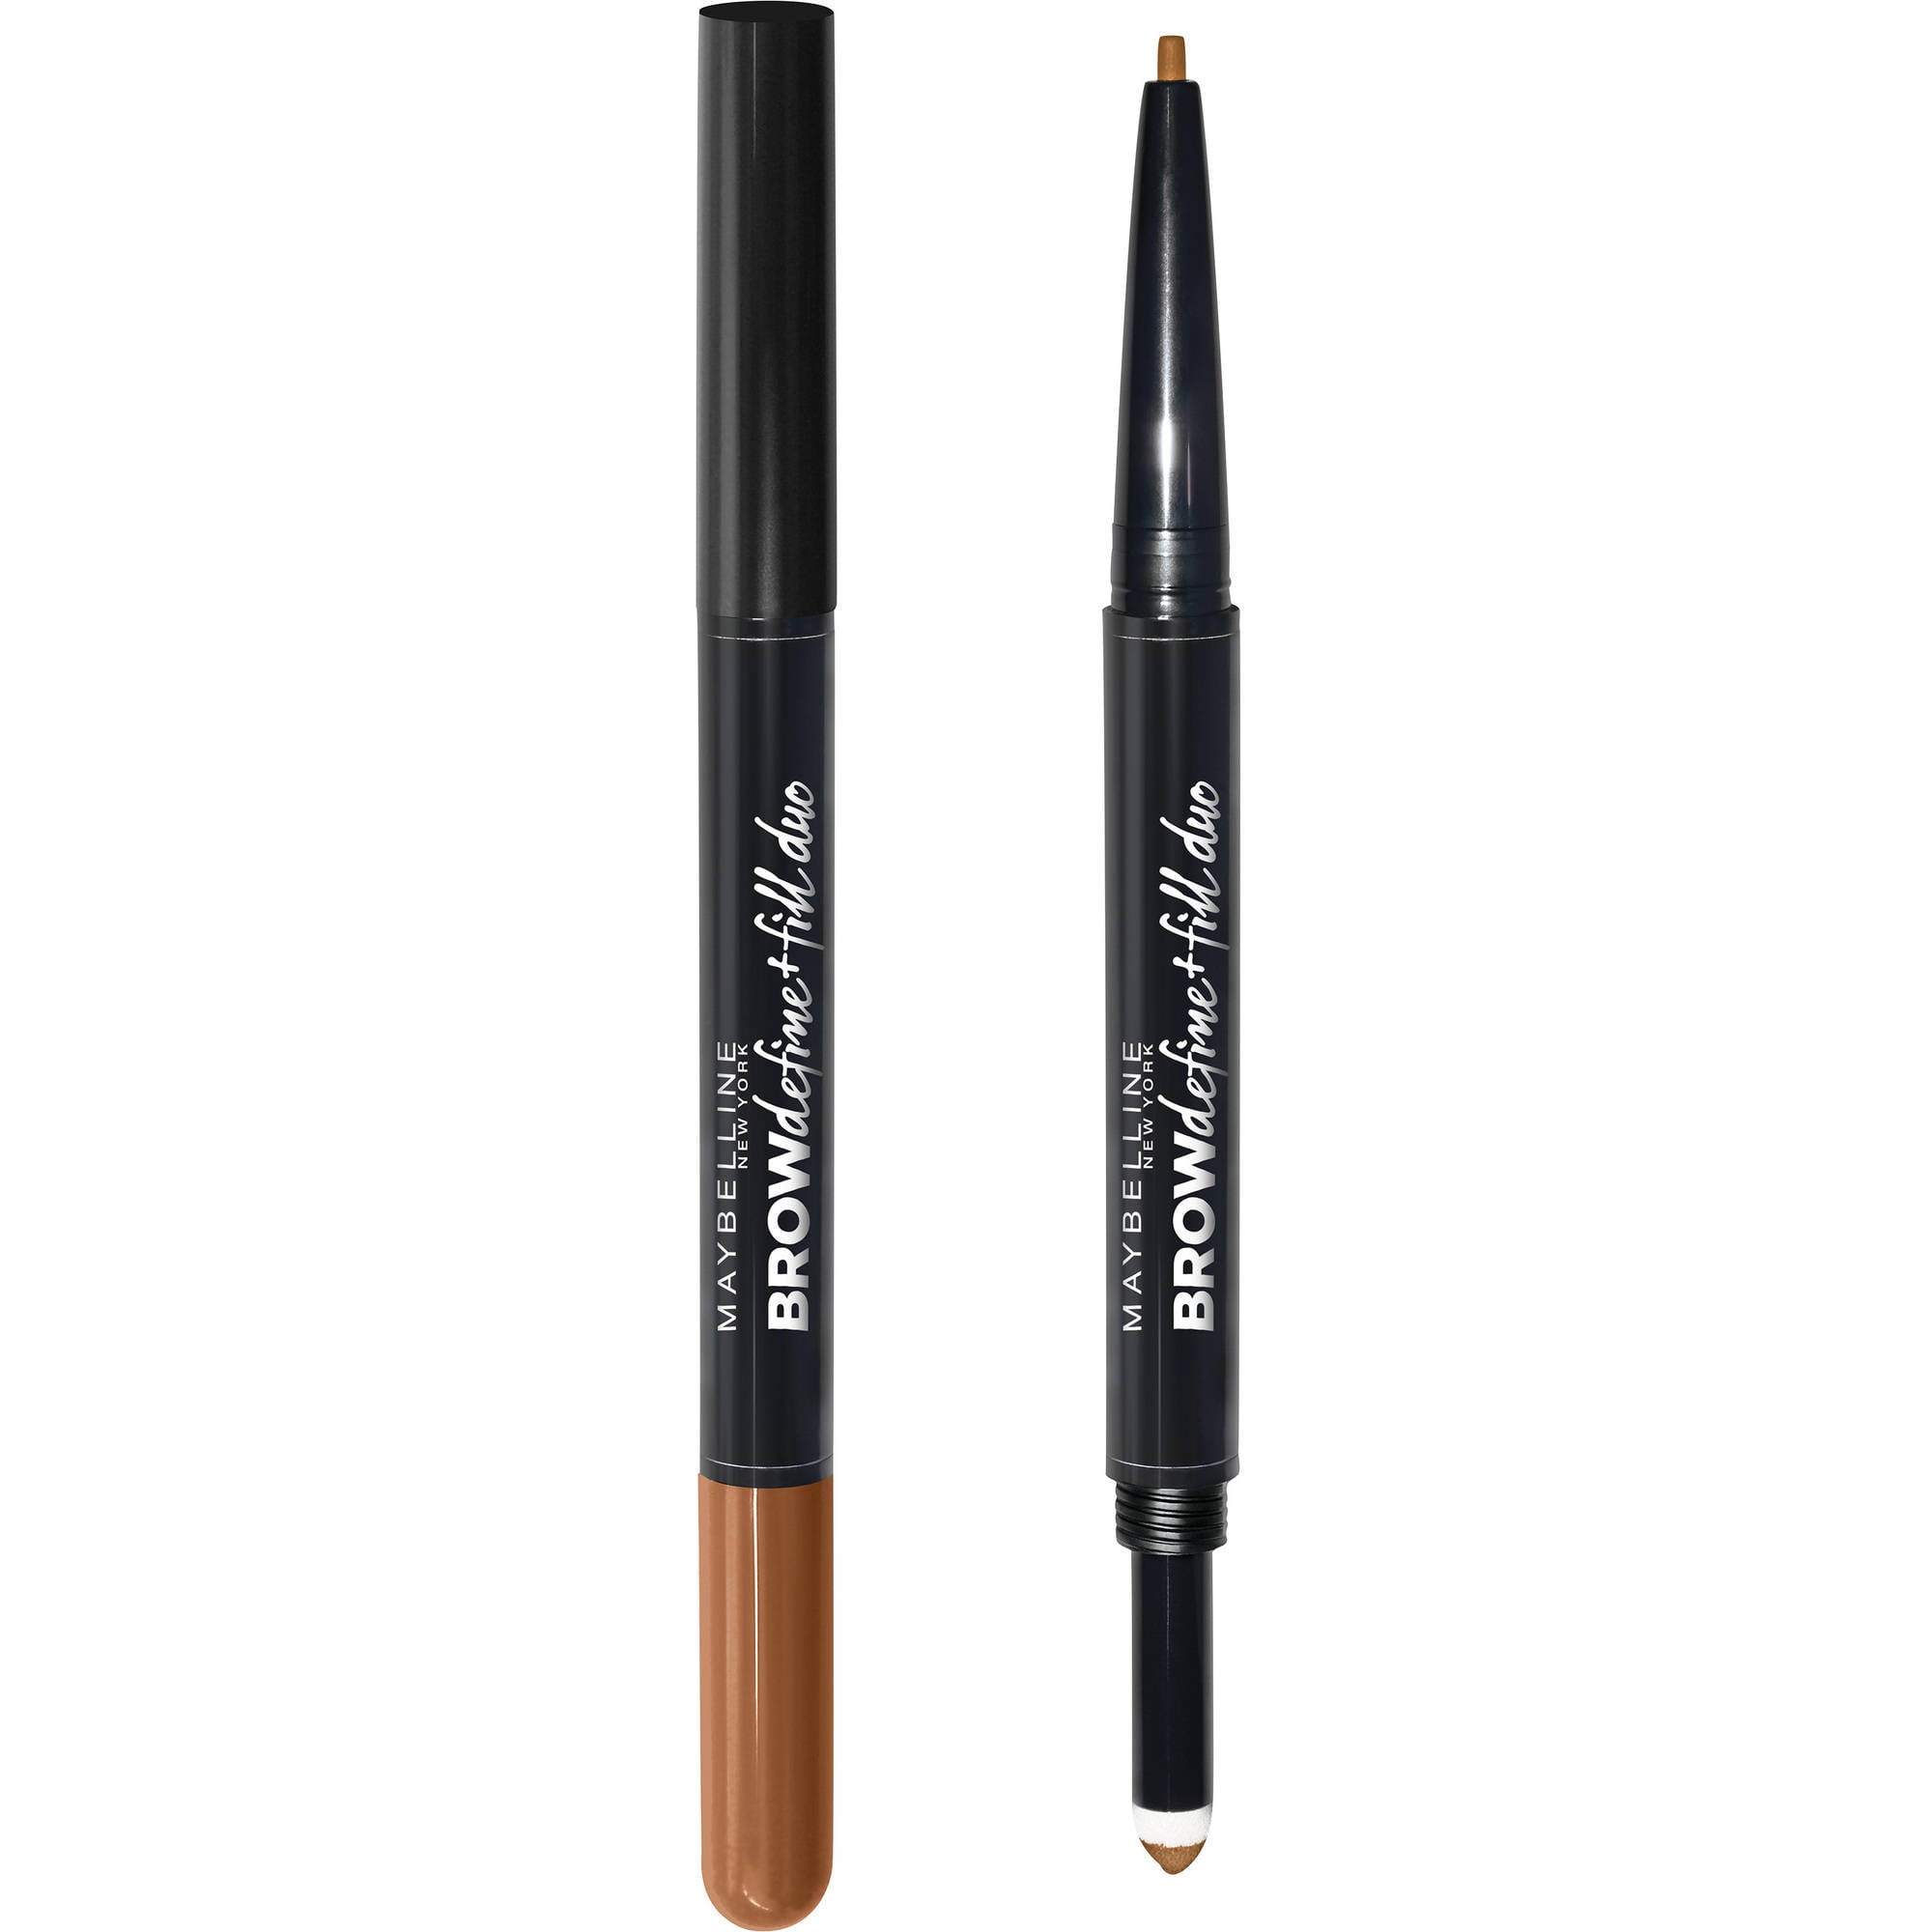 Maybelline Define+Fill Duo Defining Pencil + Filling Powder, Brow, Auburn 265